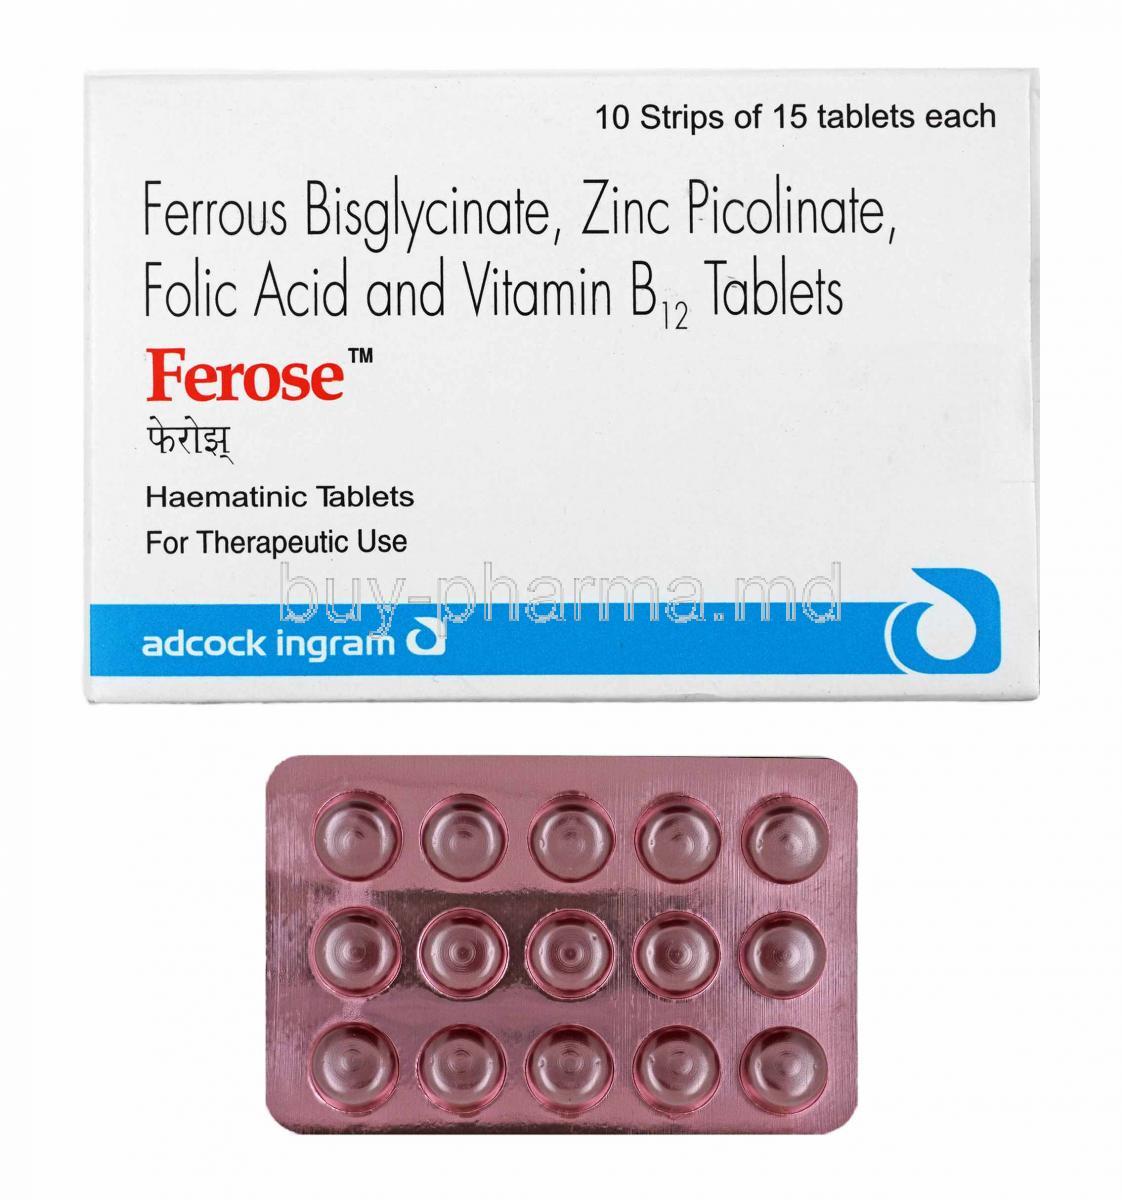 Ferose, Iron, Zinc, Folic Acid and Vitamin B12 box and tablets